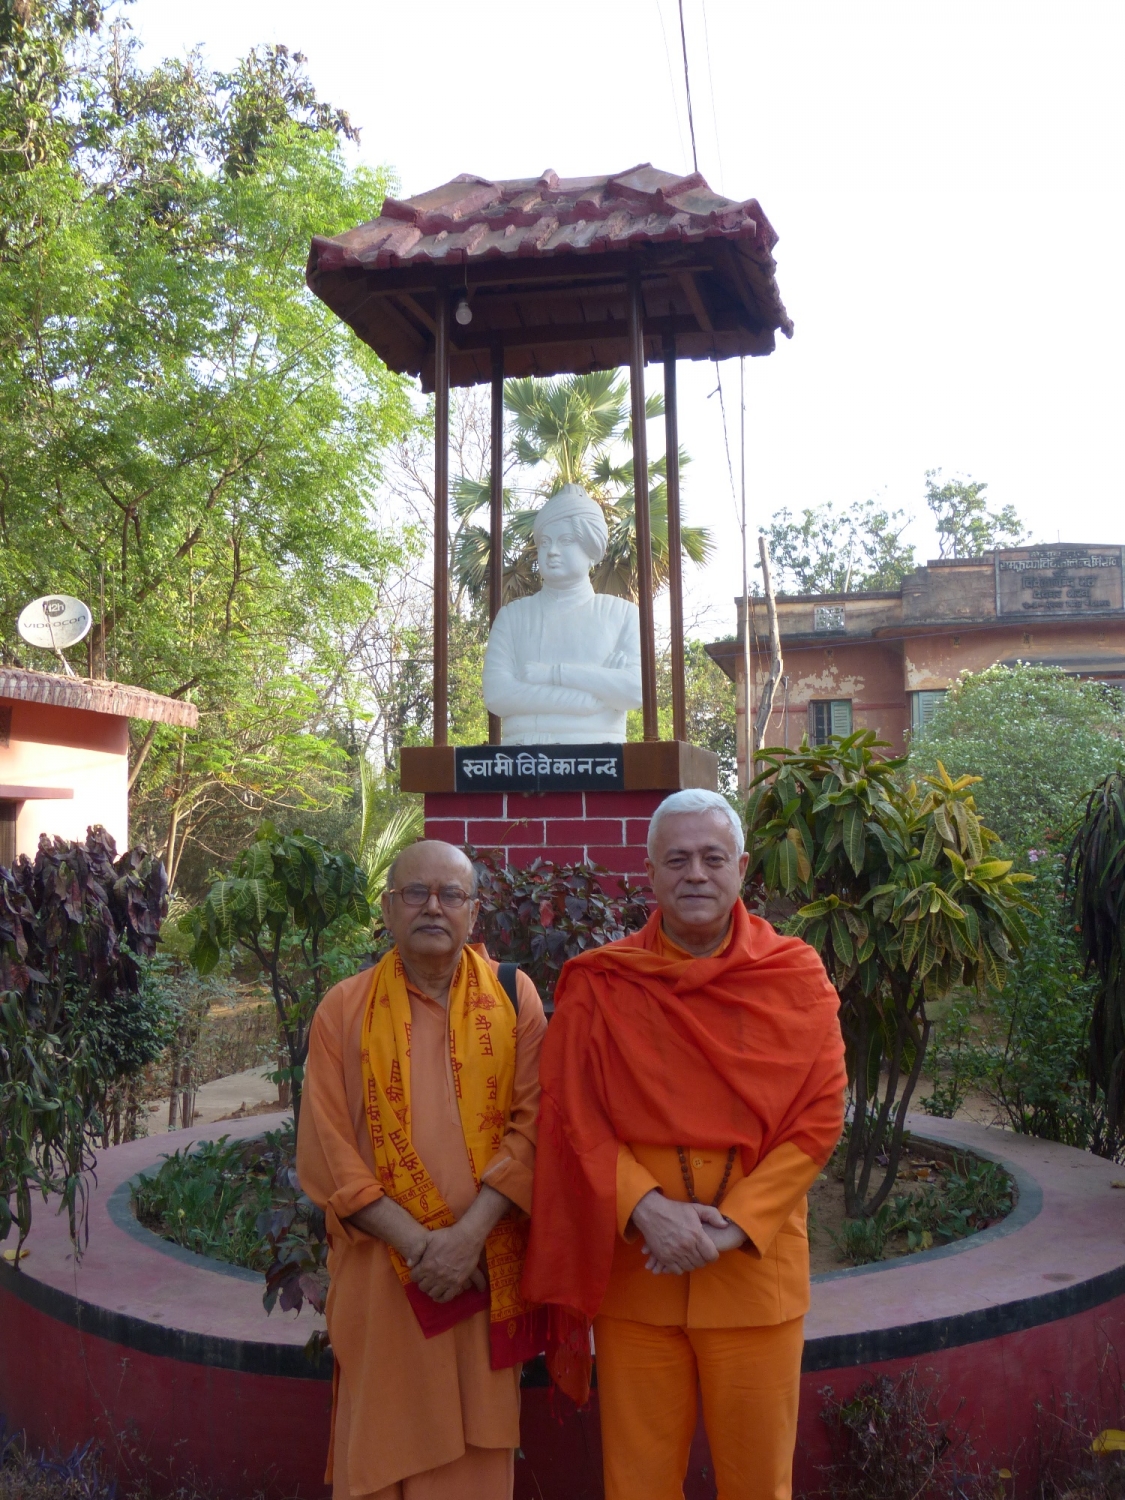 Encontro de H.H. Jagat Guru Amrta Sūryānanda Mahā Rāja com Svámin Malgalteertam - Dehogar, Índia - 2016, Maio